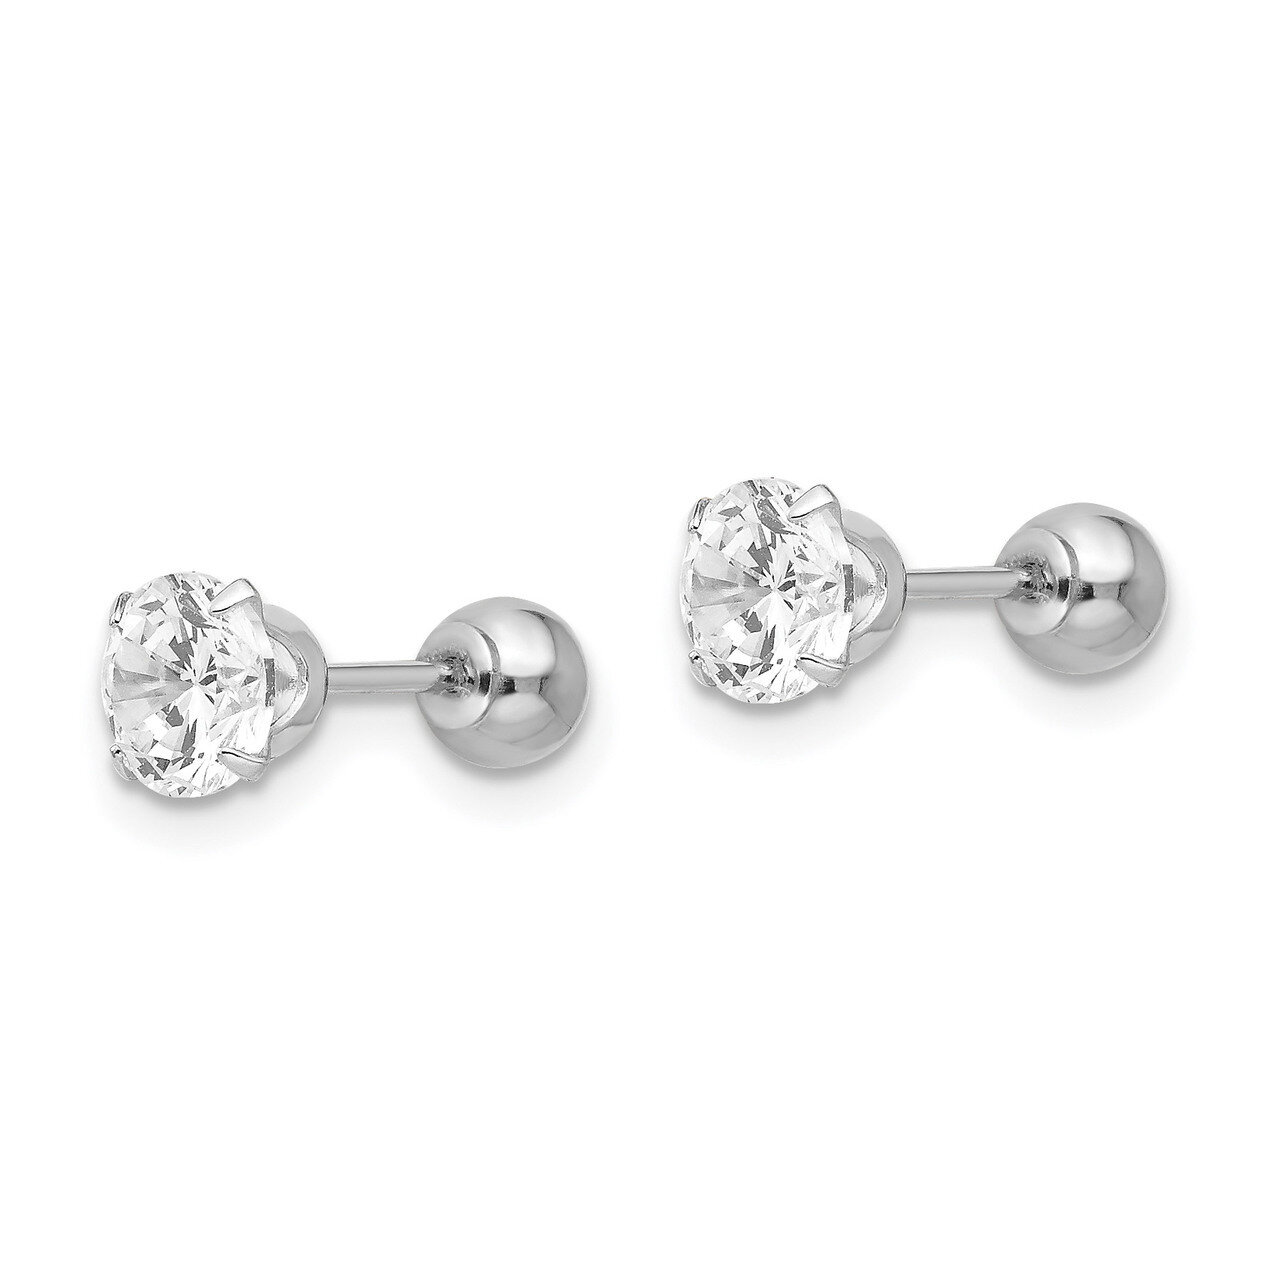 5mm Synthetic Diamond and 4mm Ball Reversible Earrings - 14k White Gold SE1771